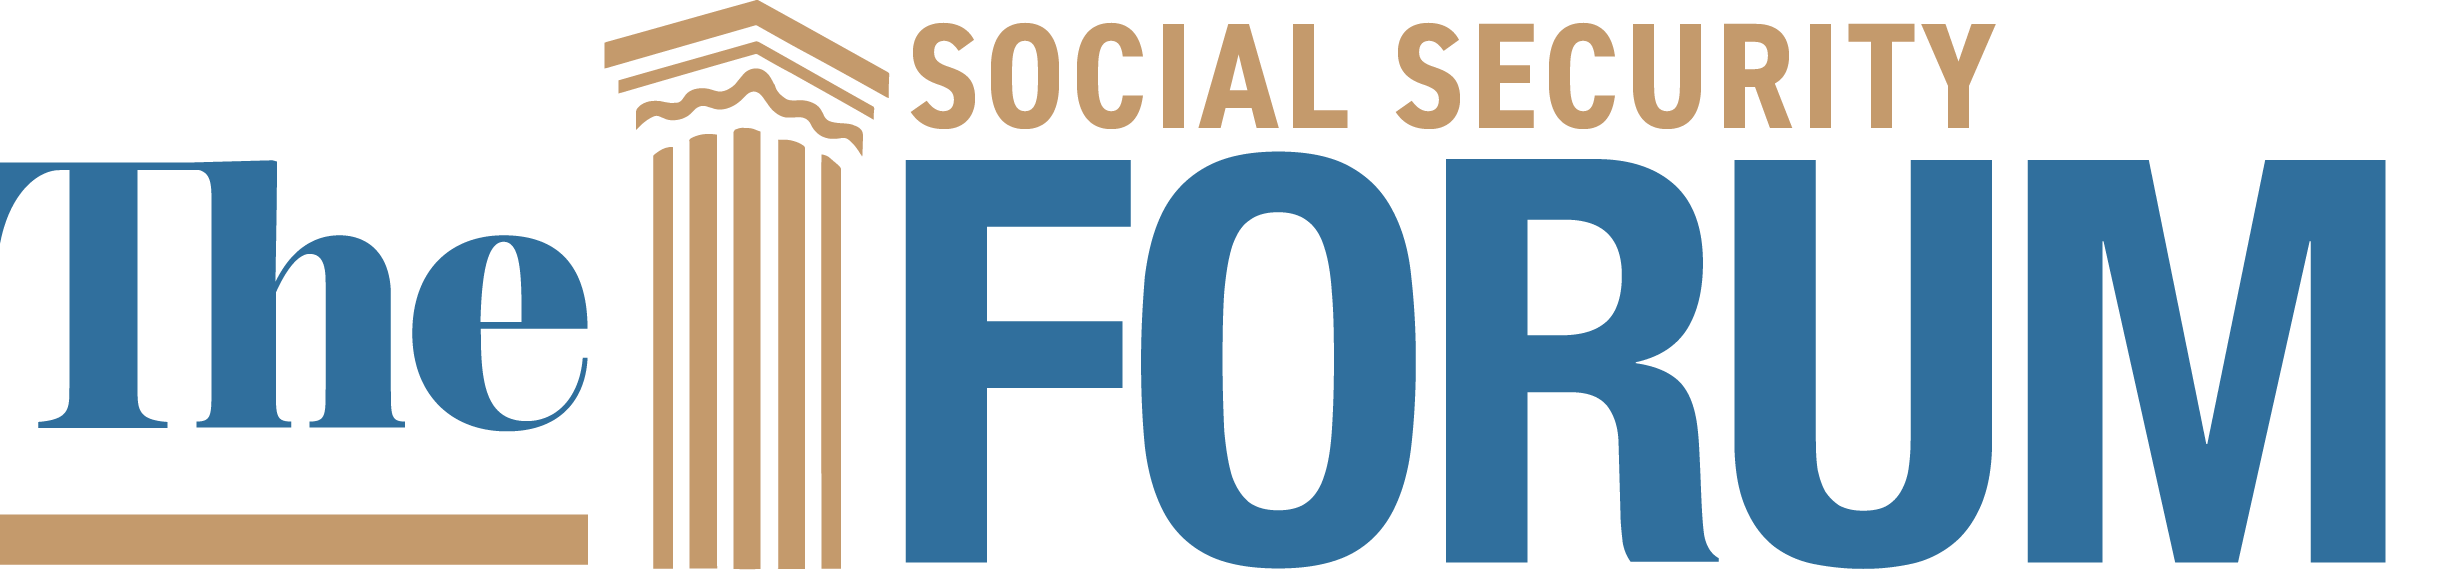 The Social Security Forum